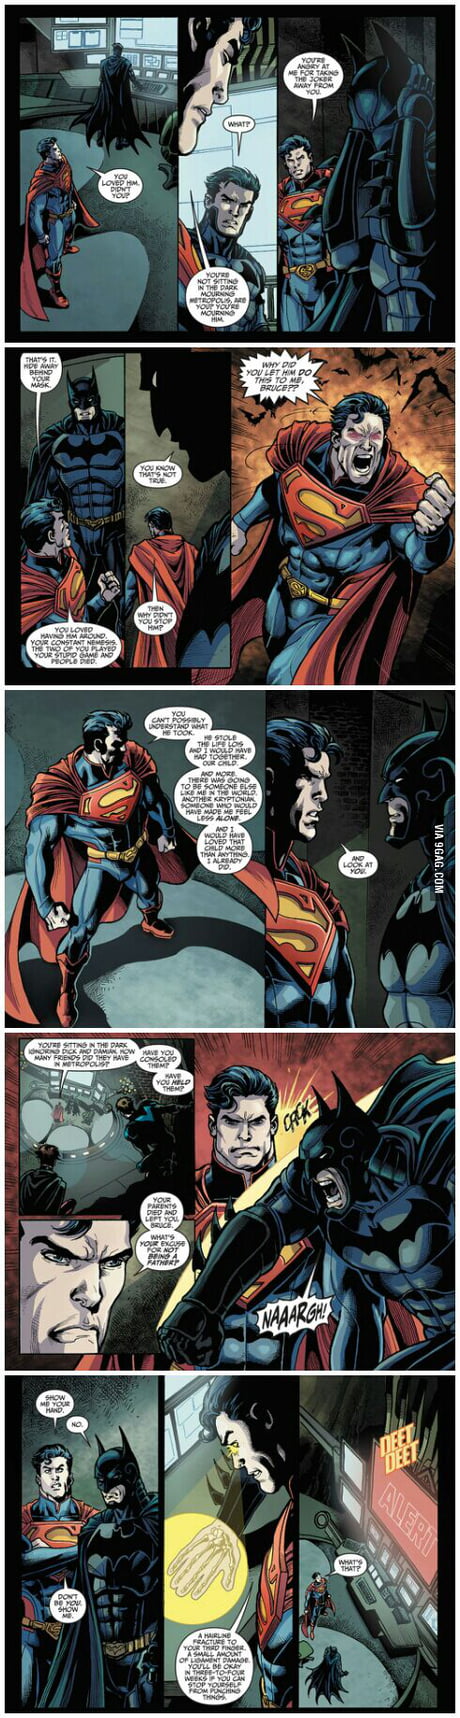 Joker destroys metropolis and drugs superman, fooling him to kill Lois.  Superman responds by killing the joker. - 9GAG